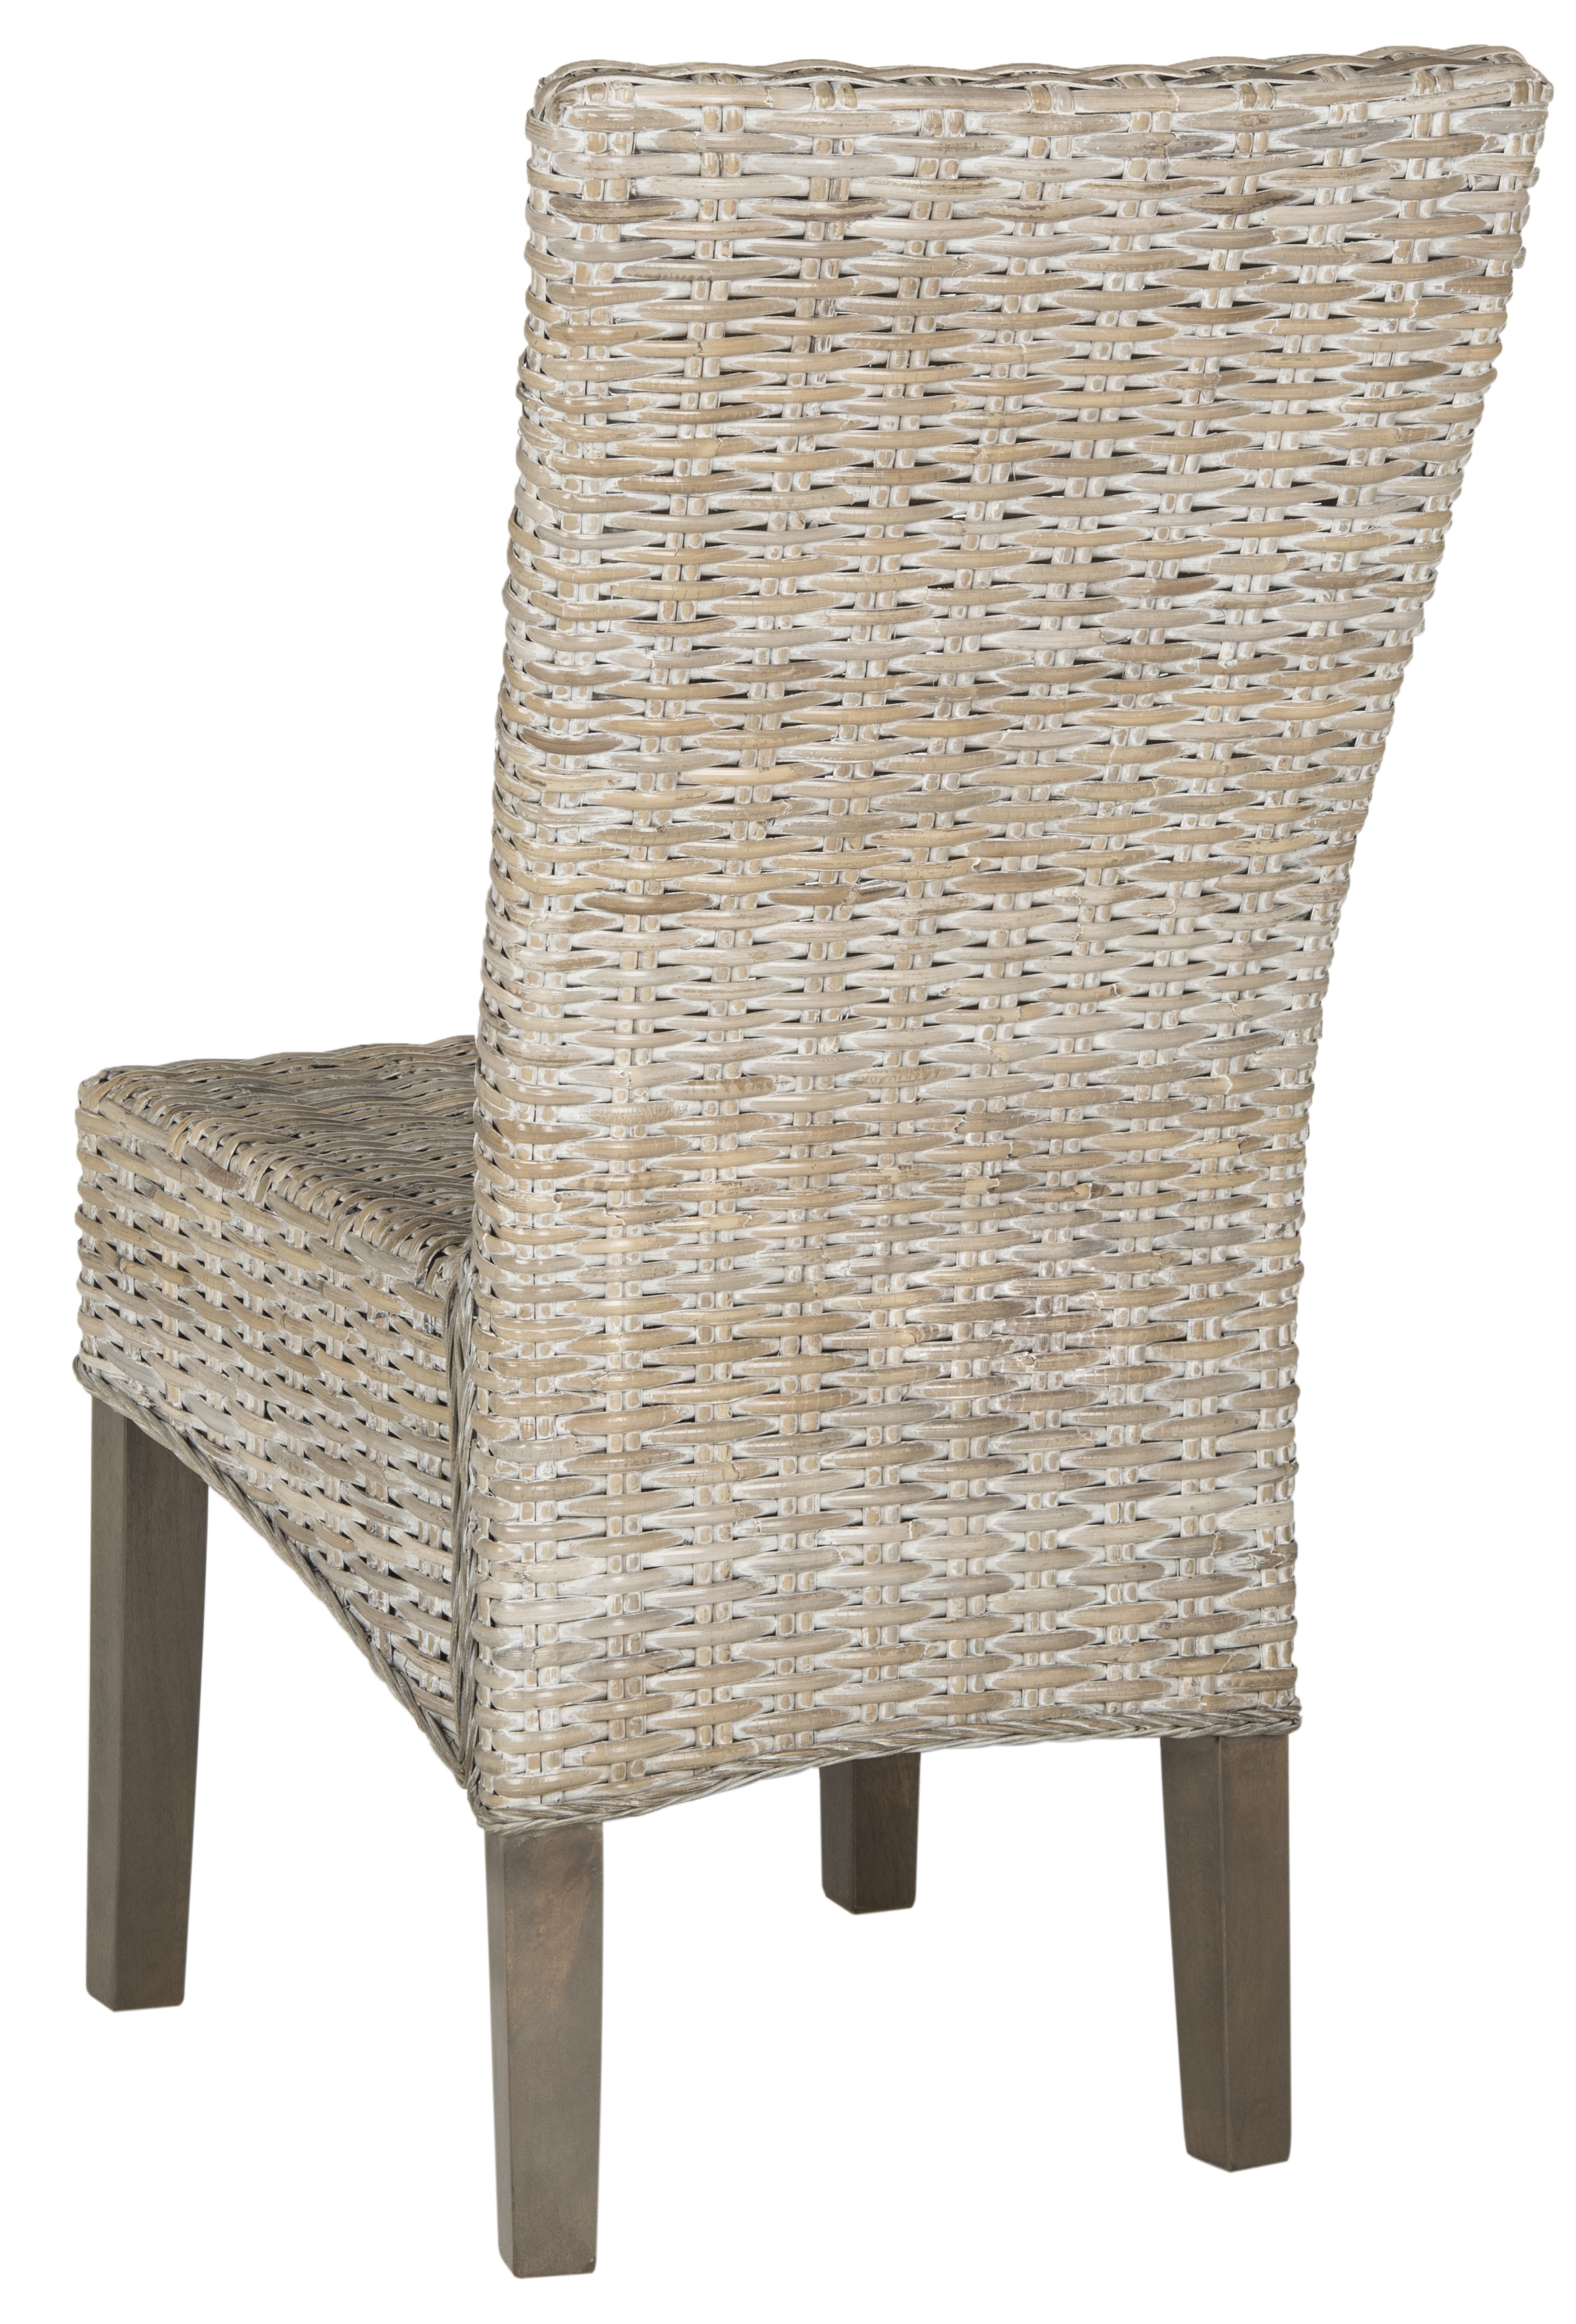 Ozias 19''H Wicker Dining Chair - White Wash - Arlo Home - Image 4